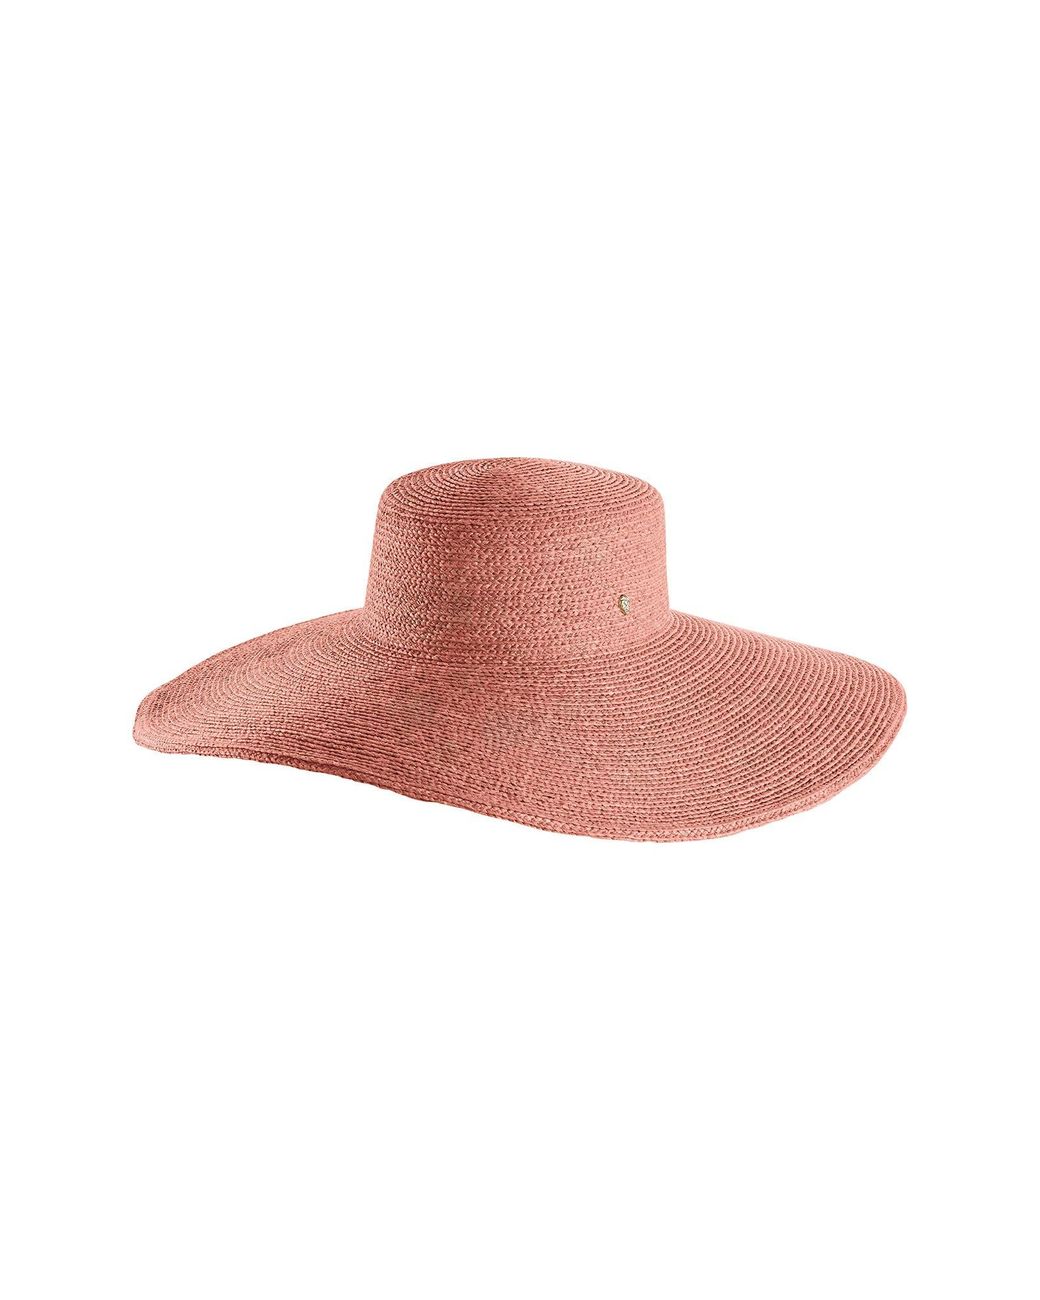 Helen Kaminski Helen Kaminiski Siena Wide Brim Raffia Hat in Pink - Lyst